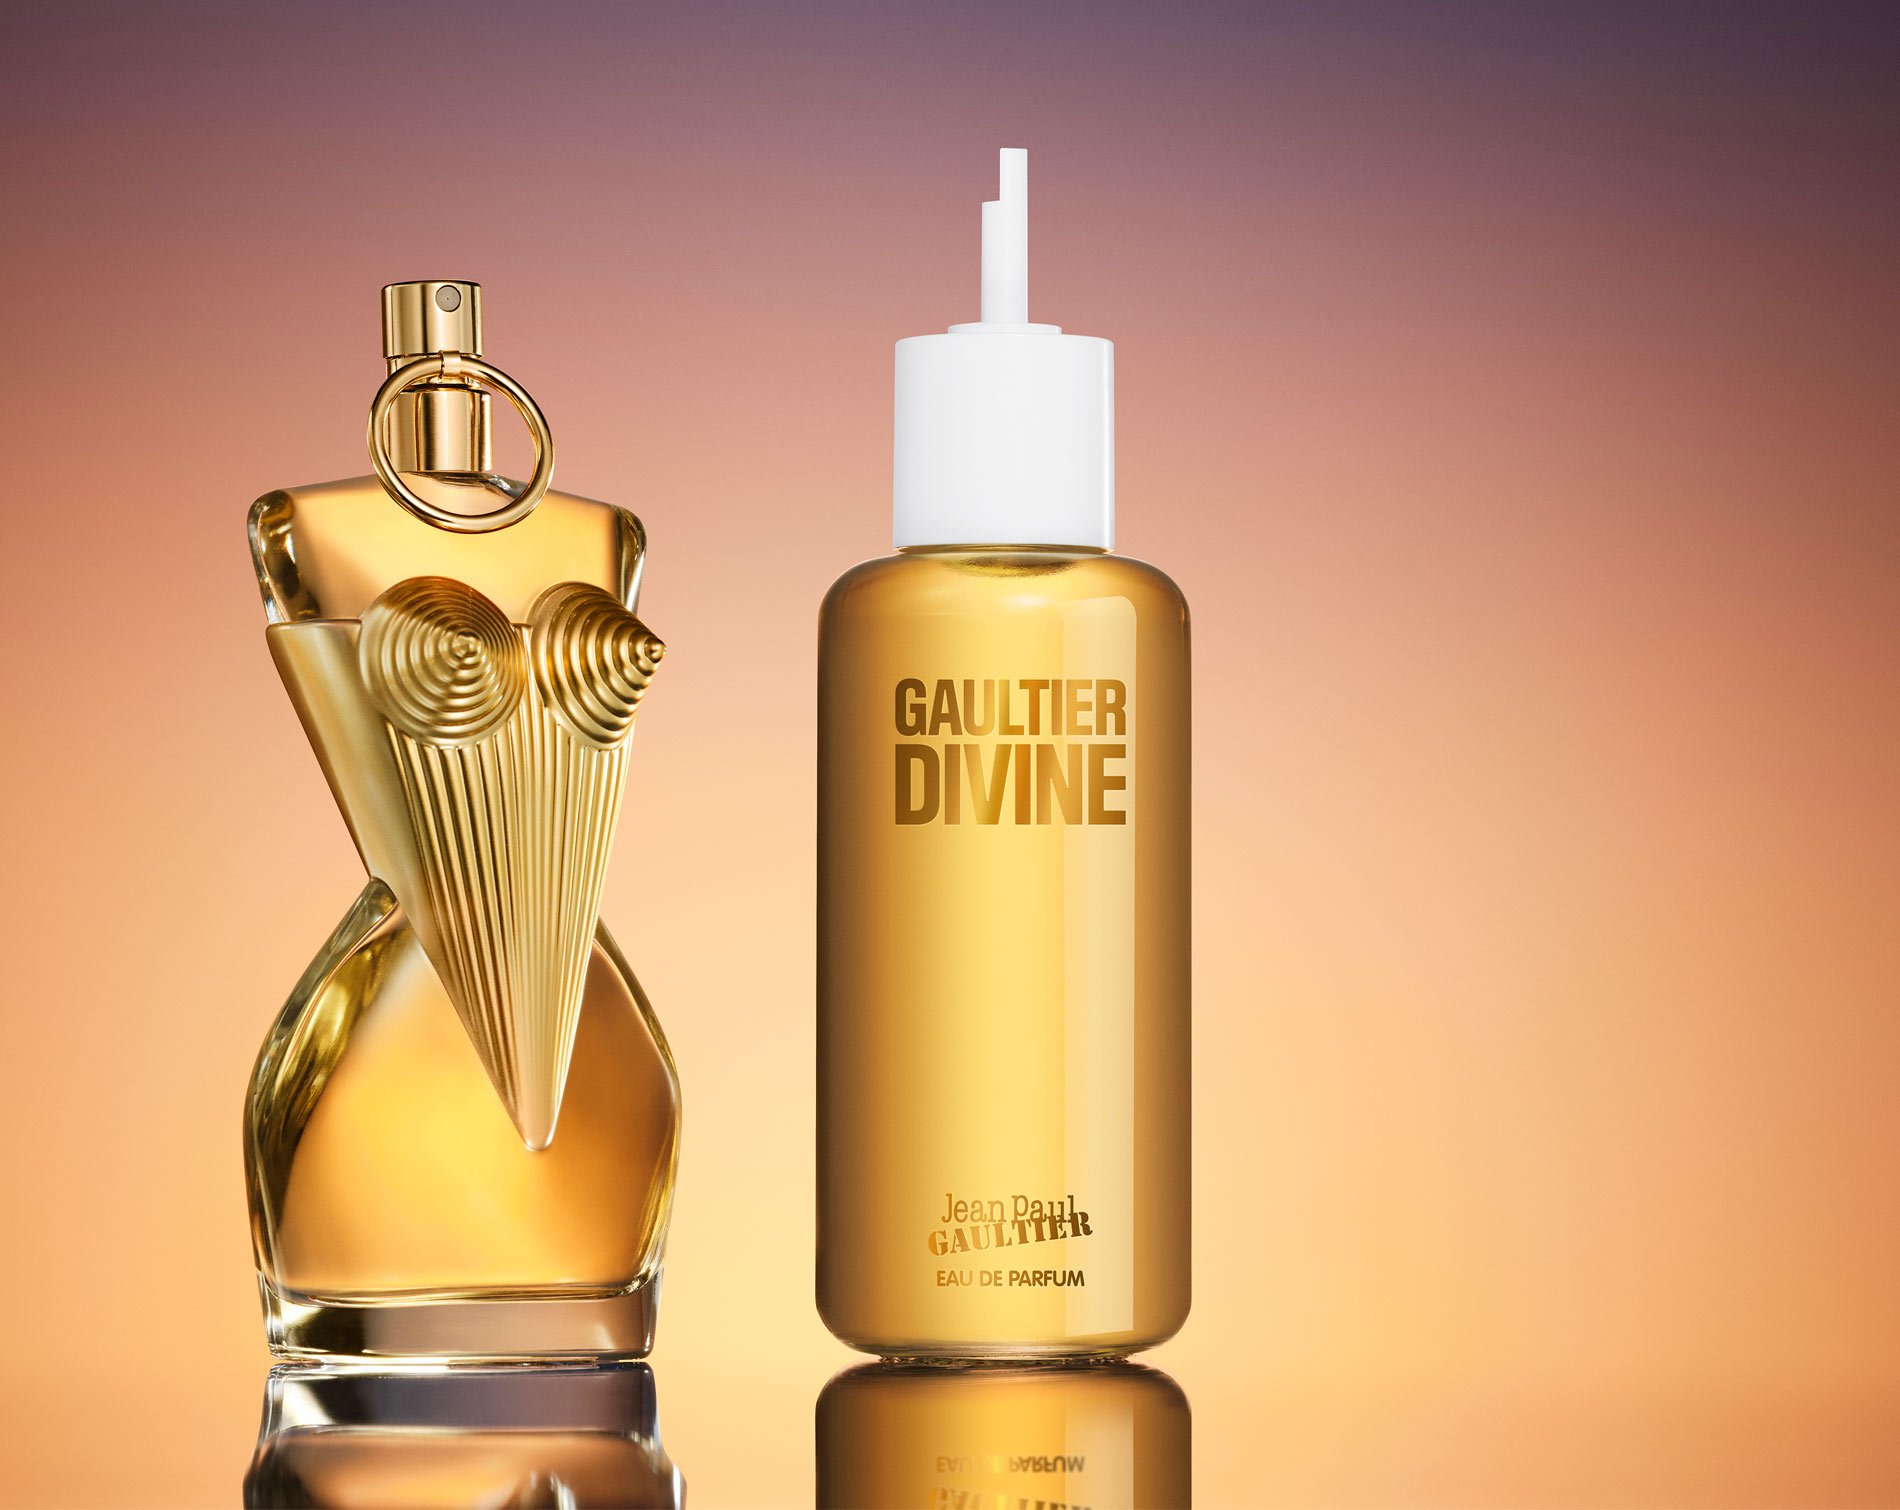 La recharge Gaultier Divine Eau de Parfum Jean Paul Gaultier